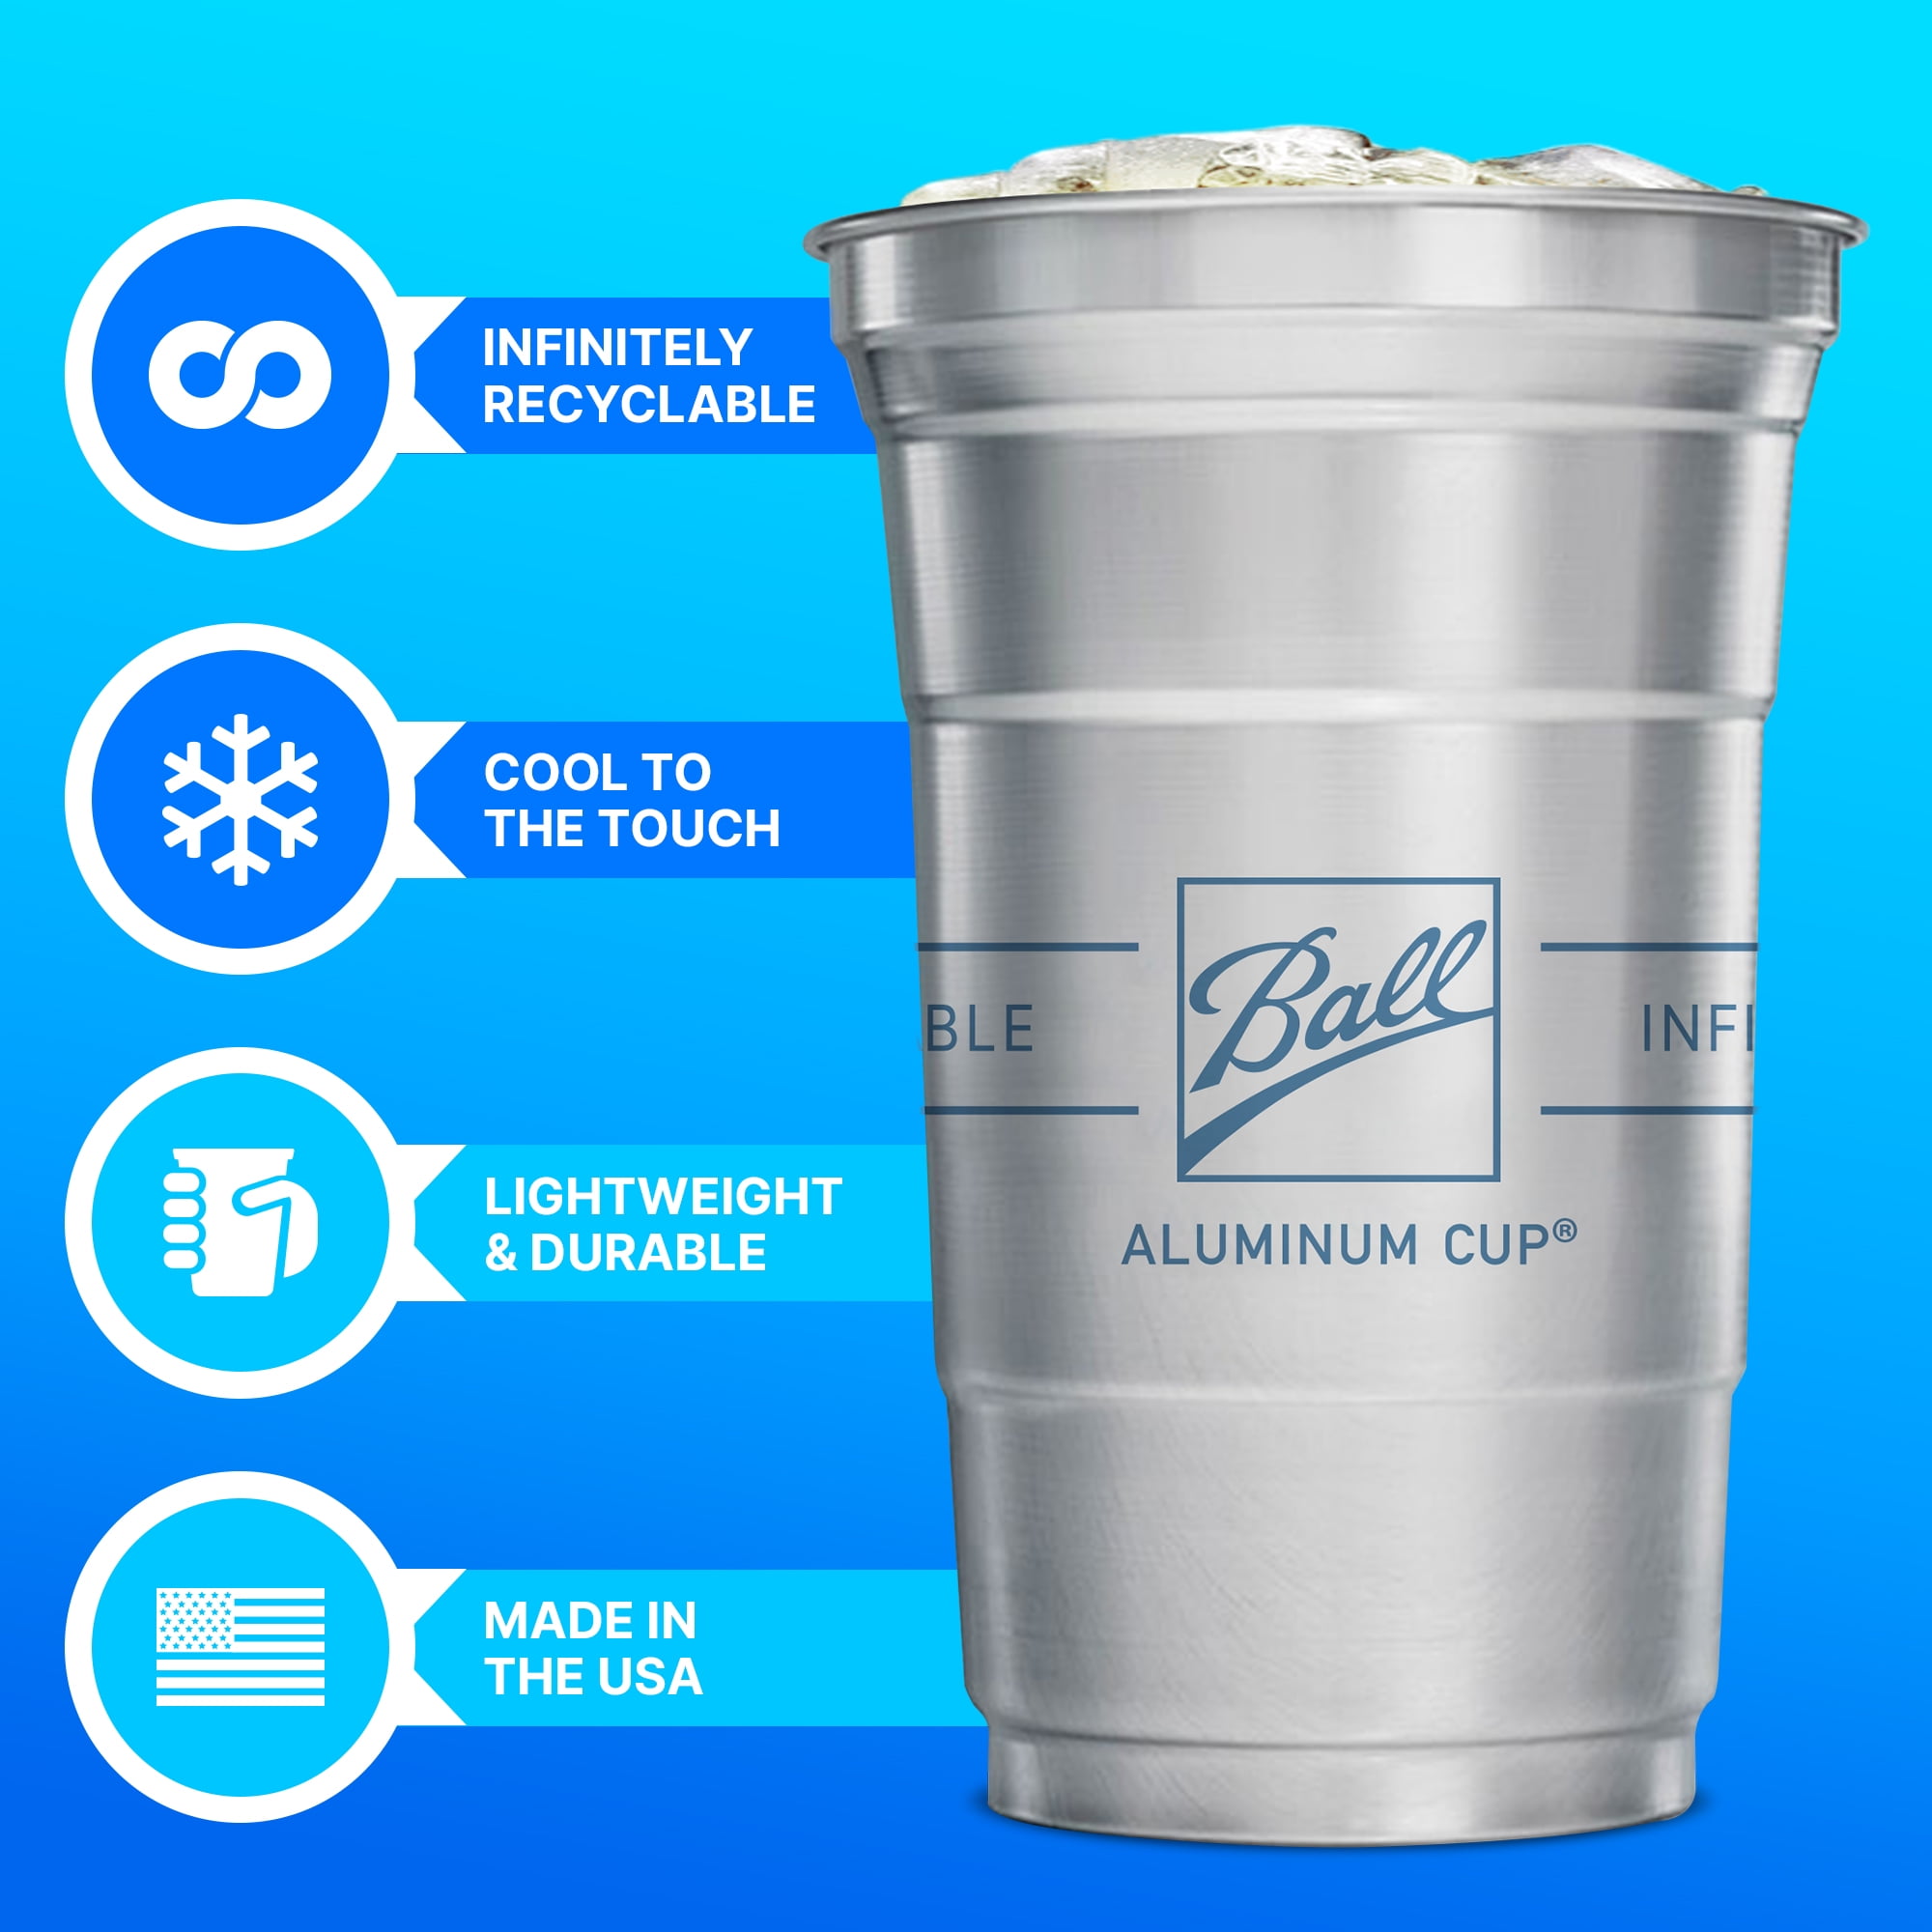 Ball Aluminum Cup® (@ballaluminumcup) • Instagram photos and videos